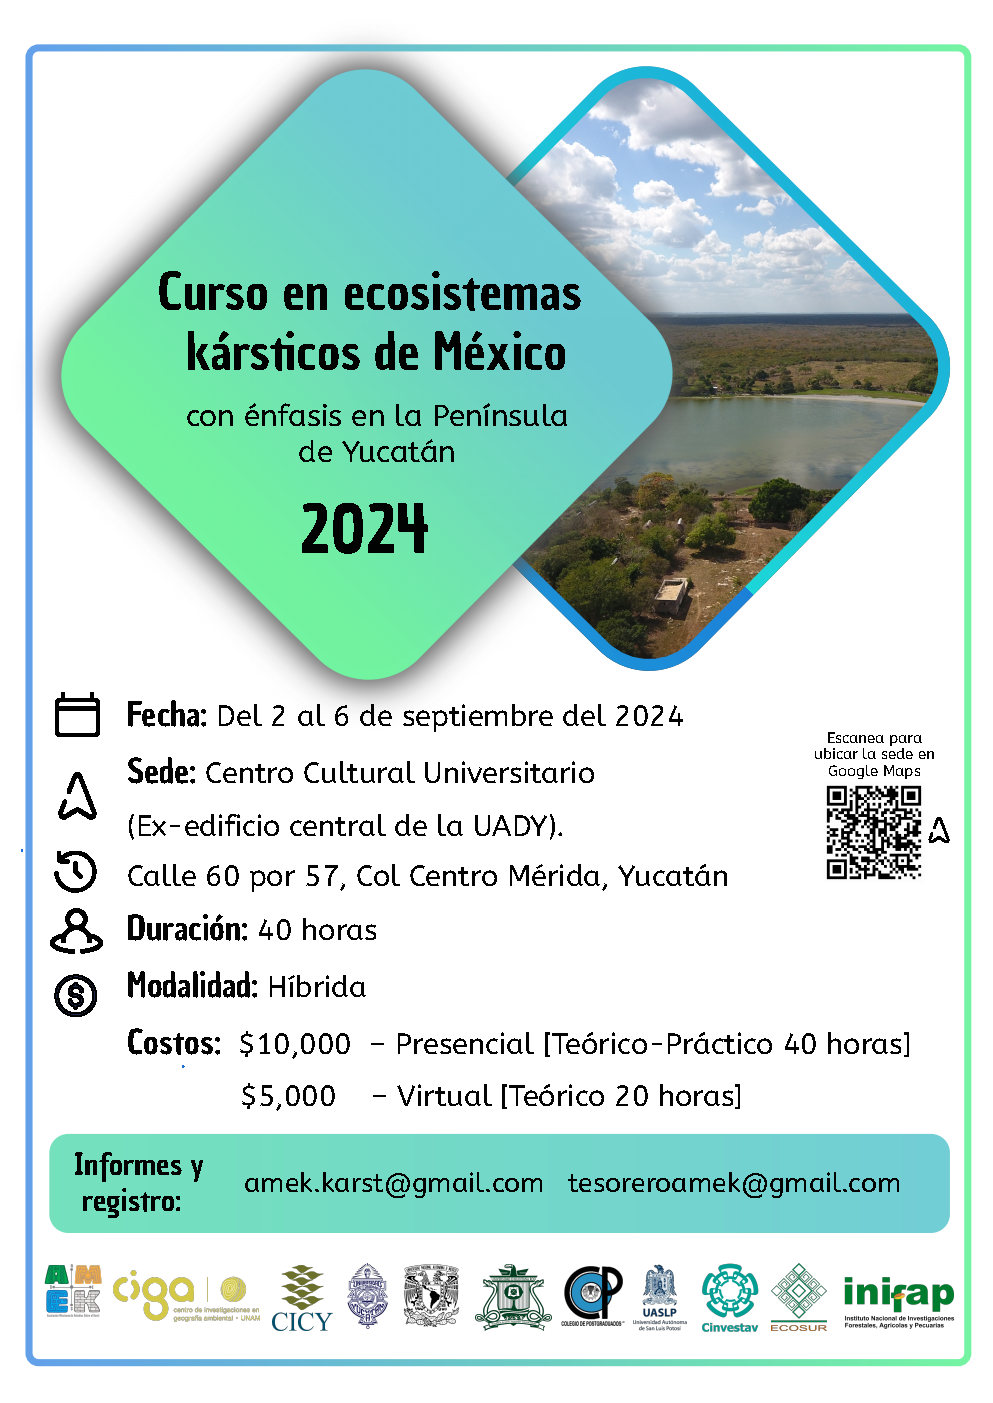 Curso en ecosistema Kársticos de México (AMEK)